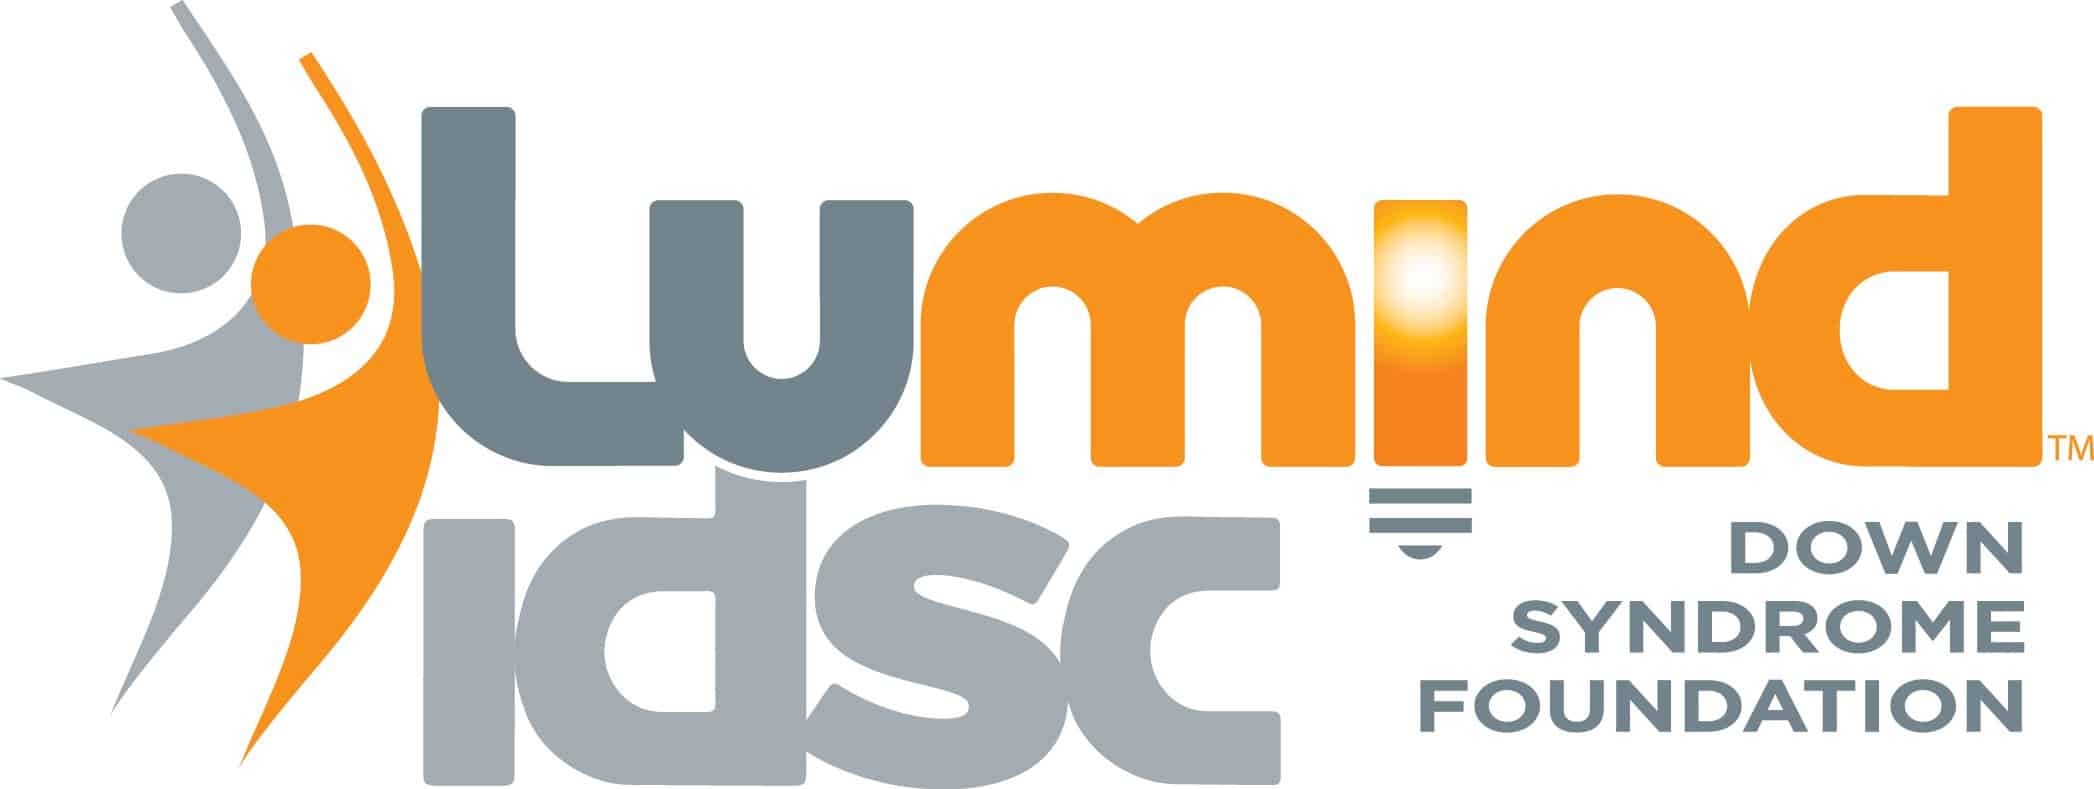 LuMind IDSC Foundation